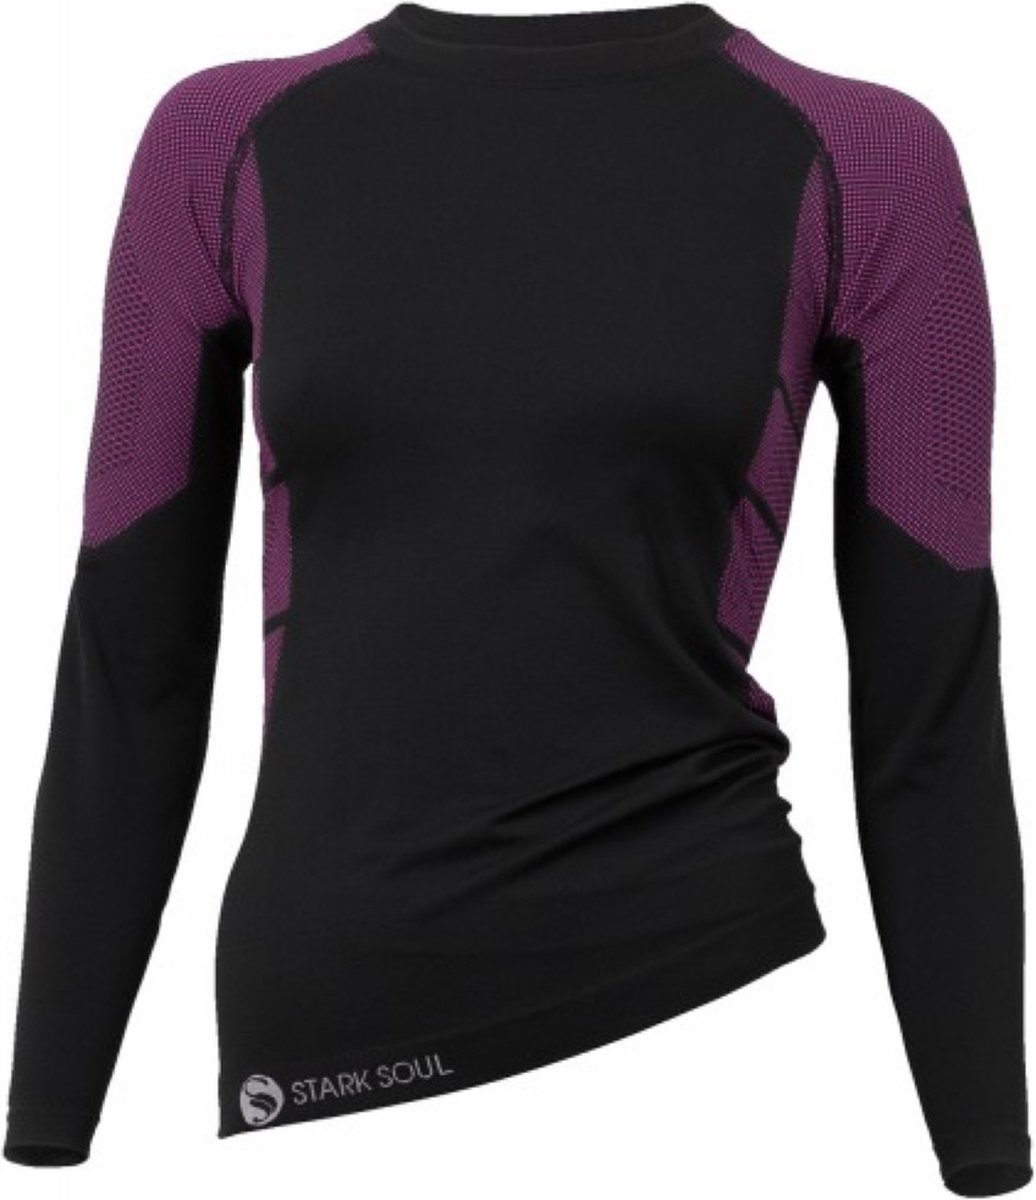 Dames thermoshirt met lange mouwen - Zwart/Roze - Maat L/XL